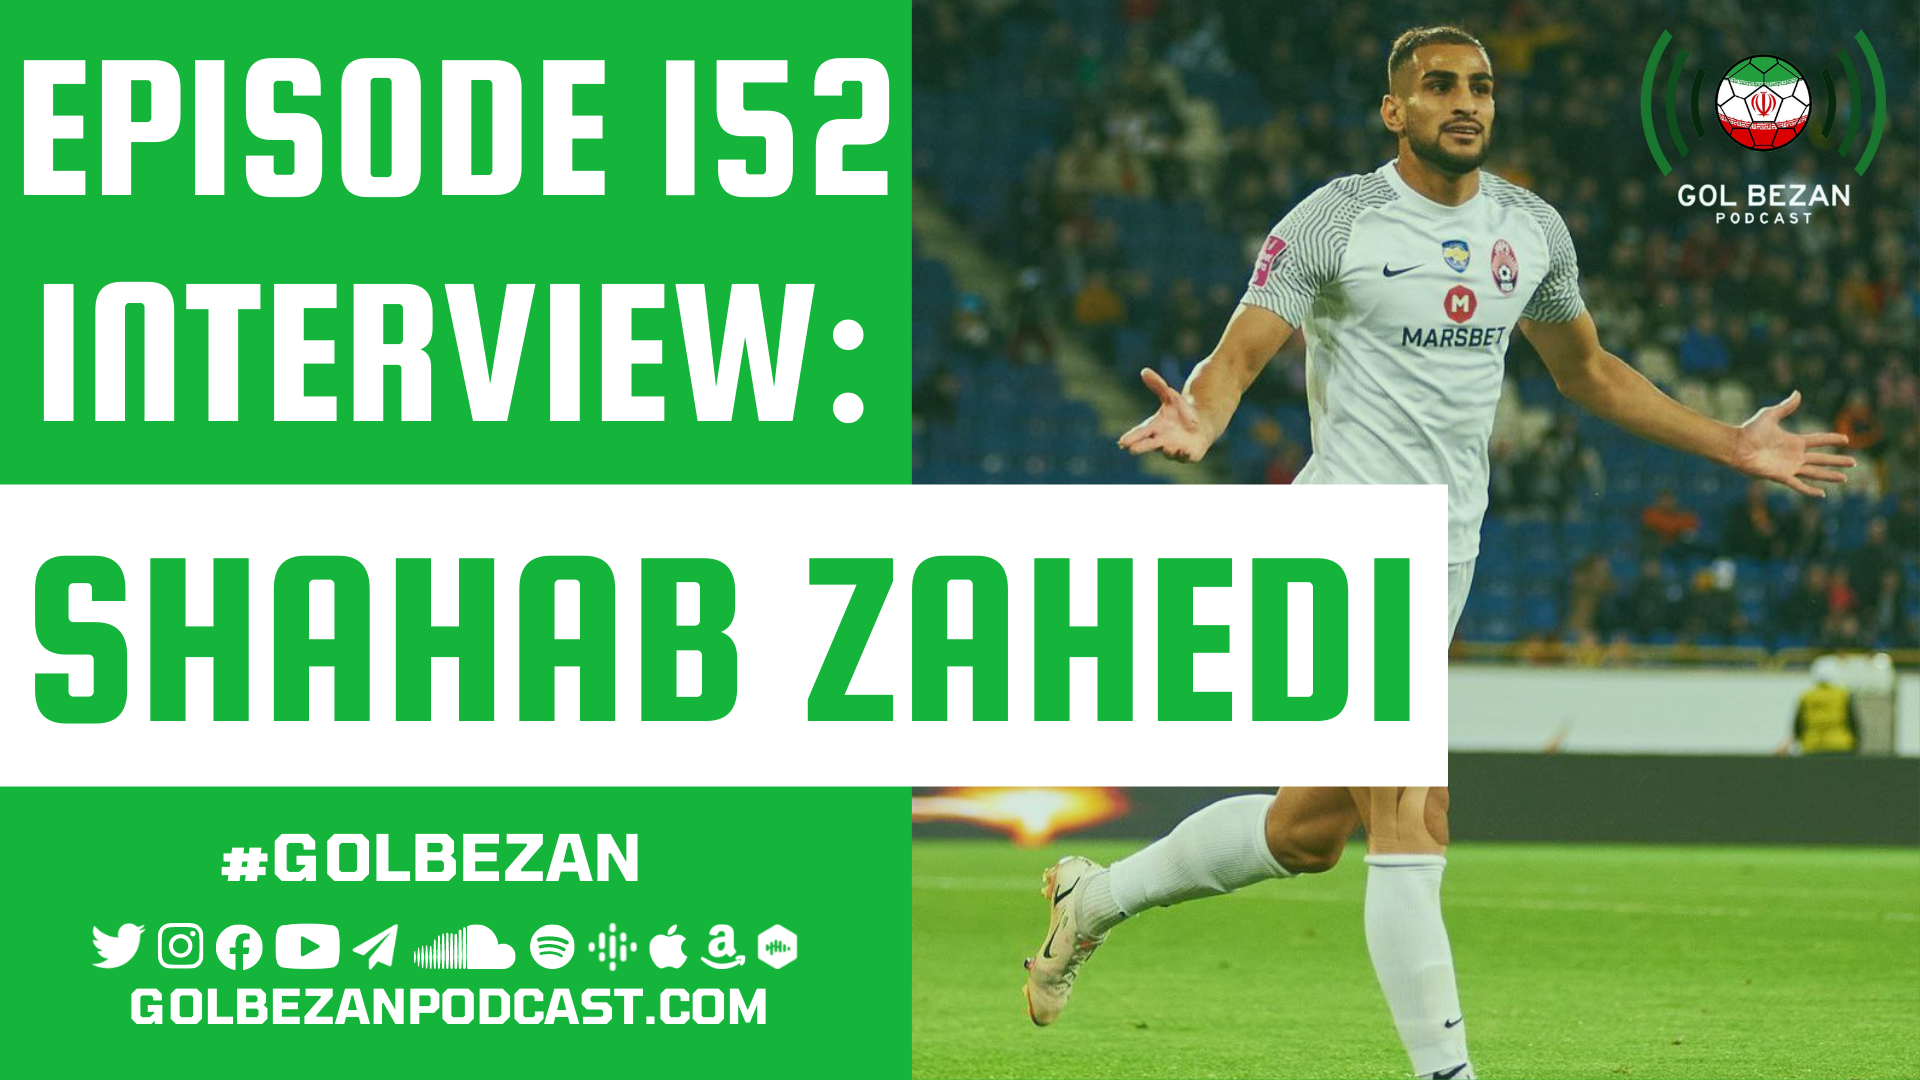 Interview: Shahab Zahedi (English Transcript)